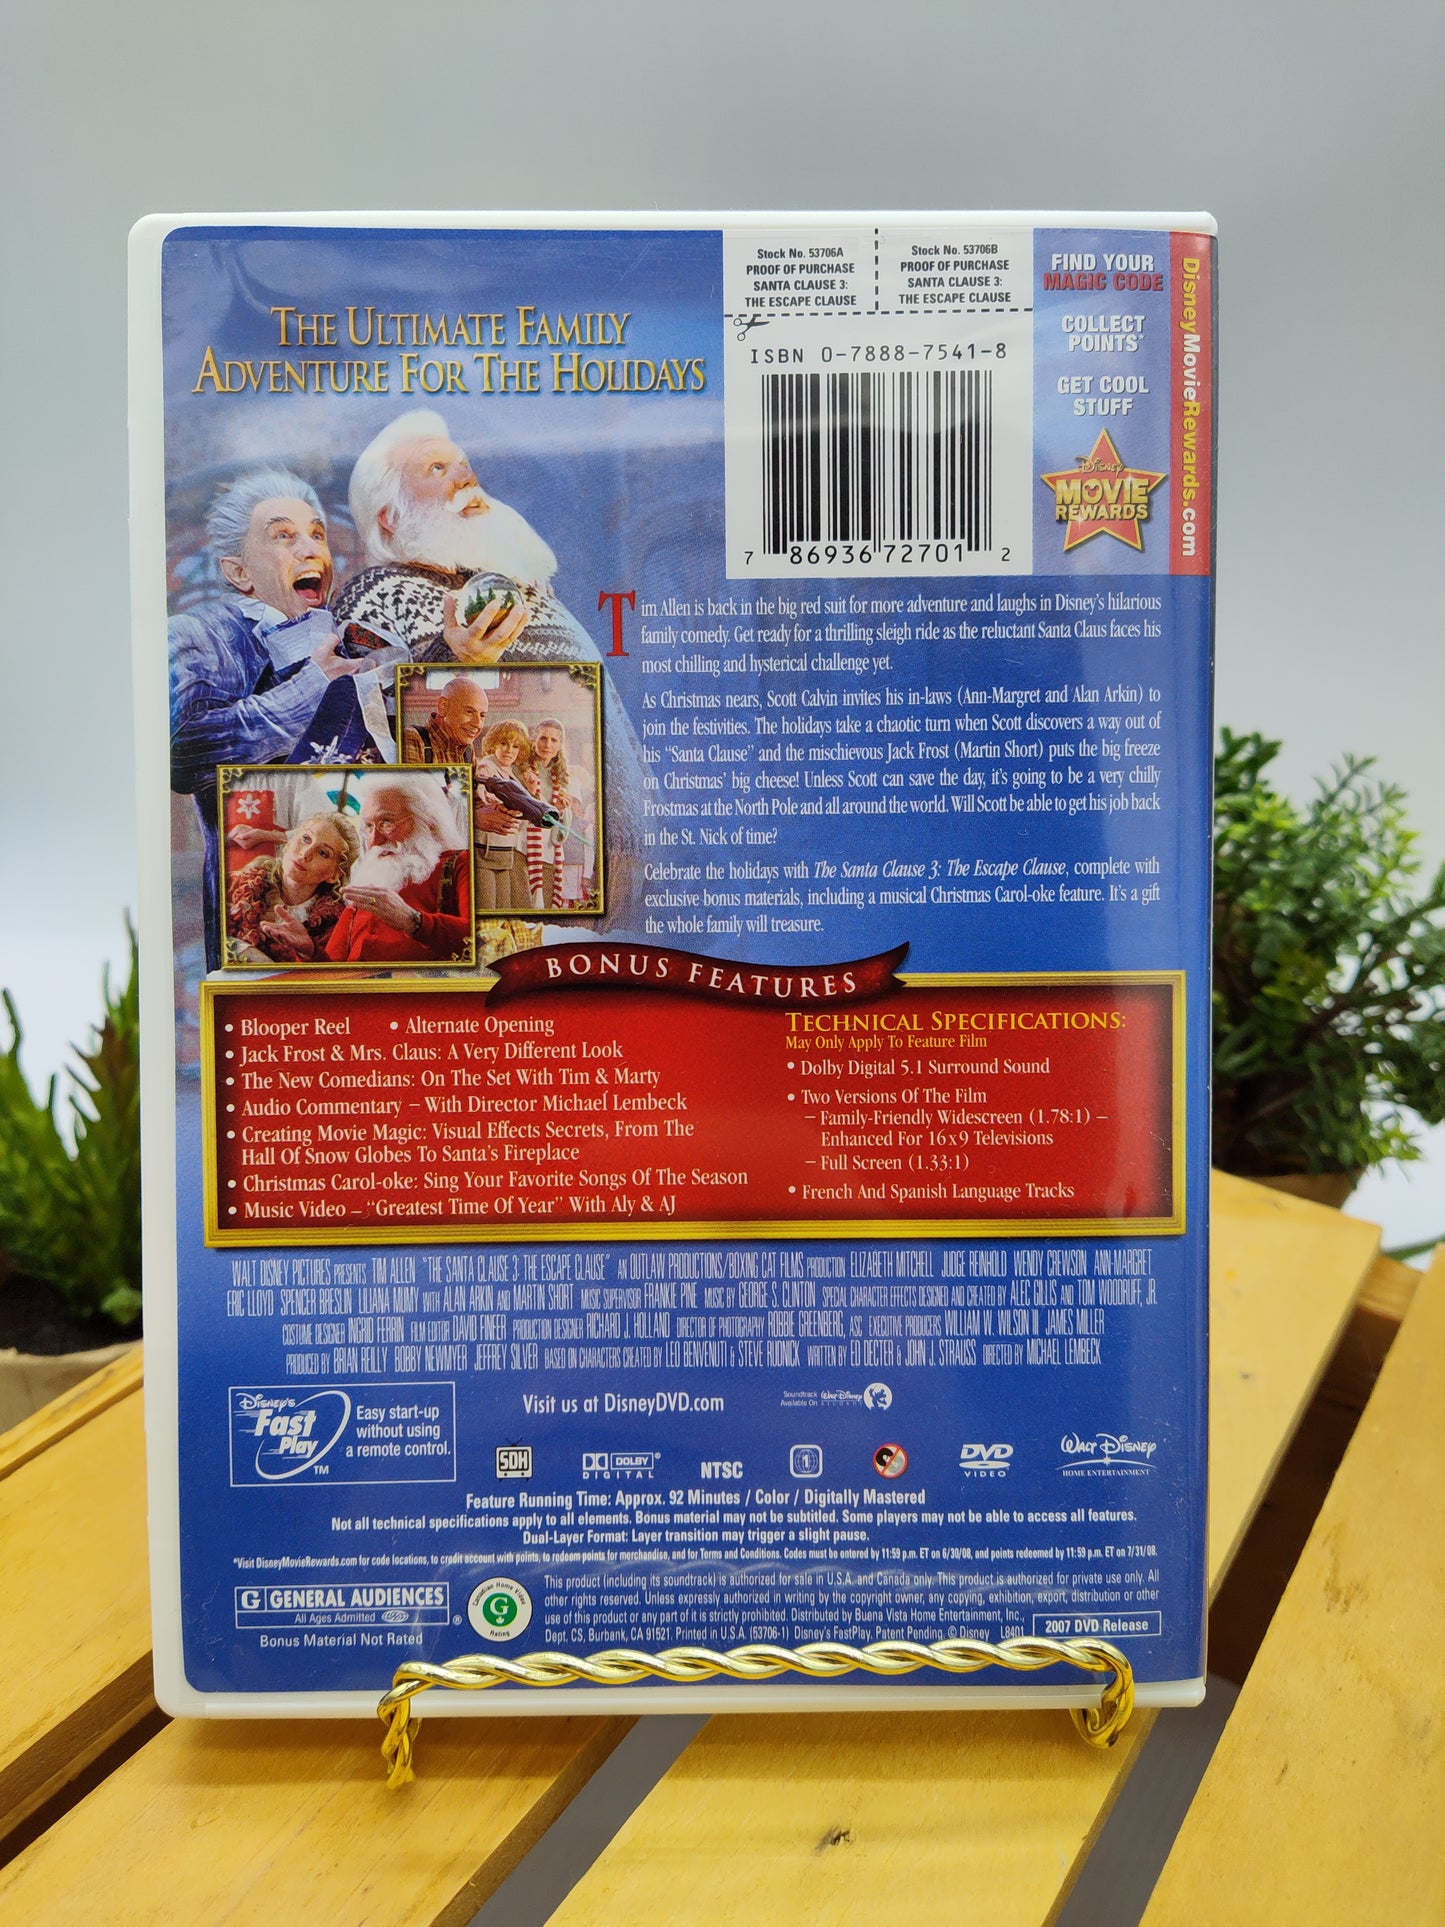 *Santa Clause 3 - The Escape Clause Christmas DVD